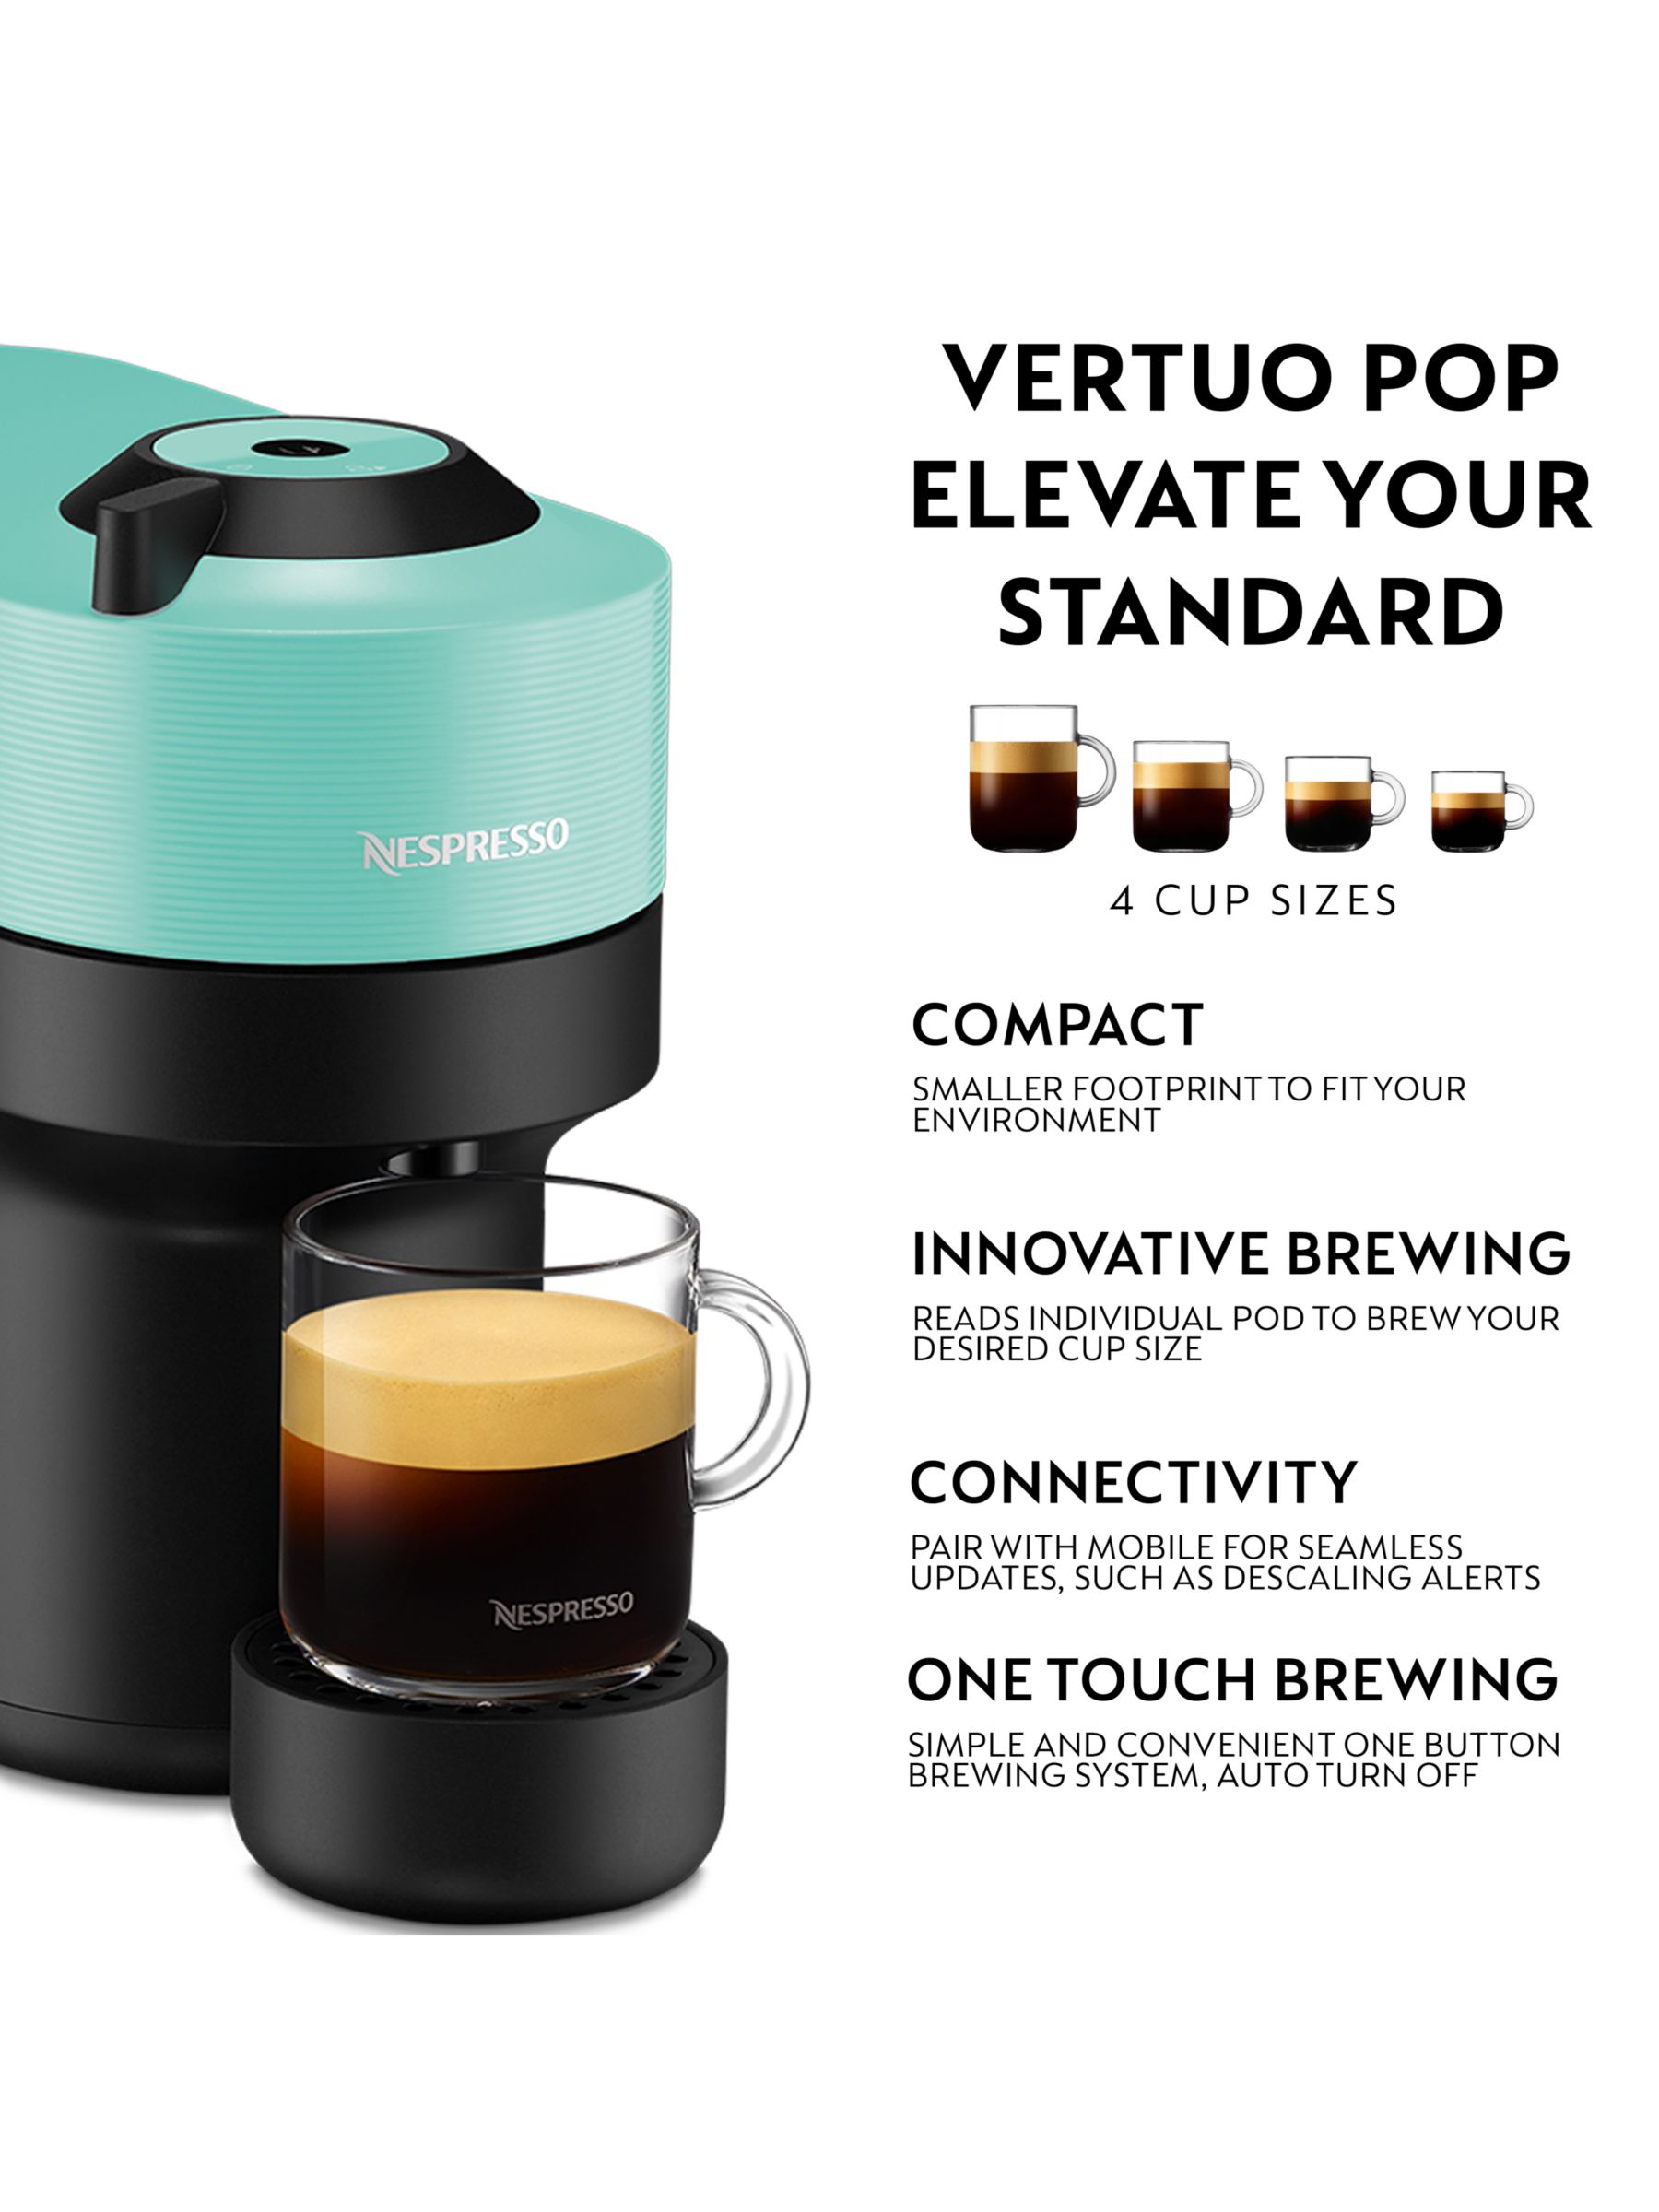 Nespresso Vertuo Pop VS Nespresso Vertuo Next Coffee machine review 